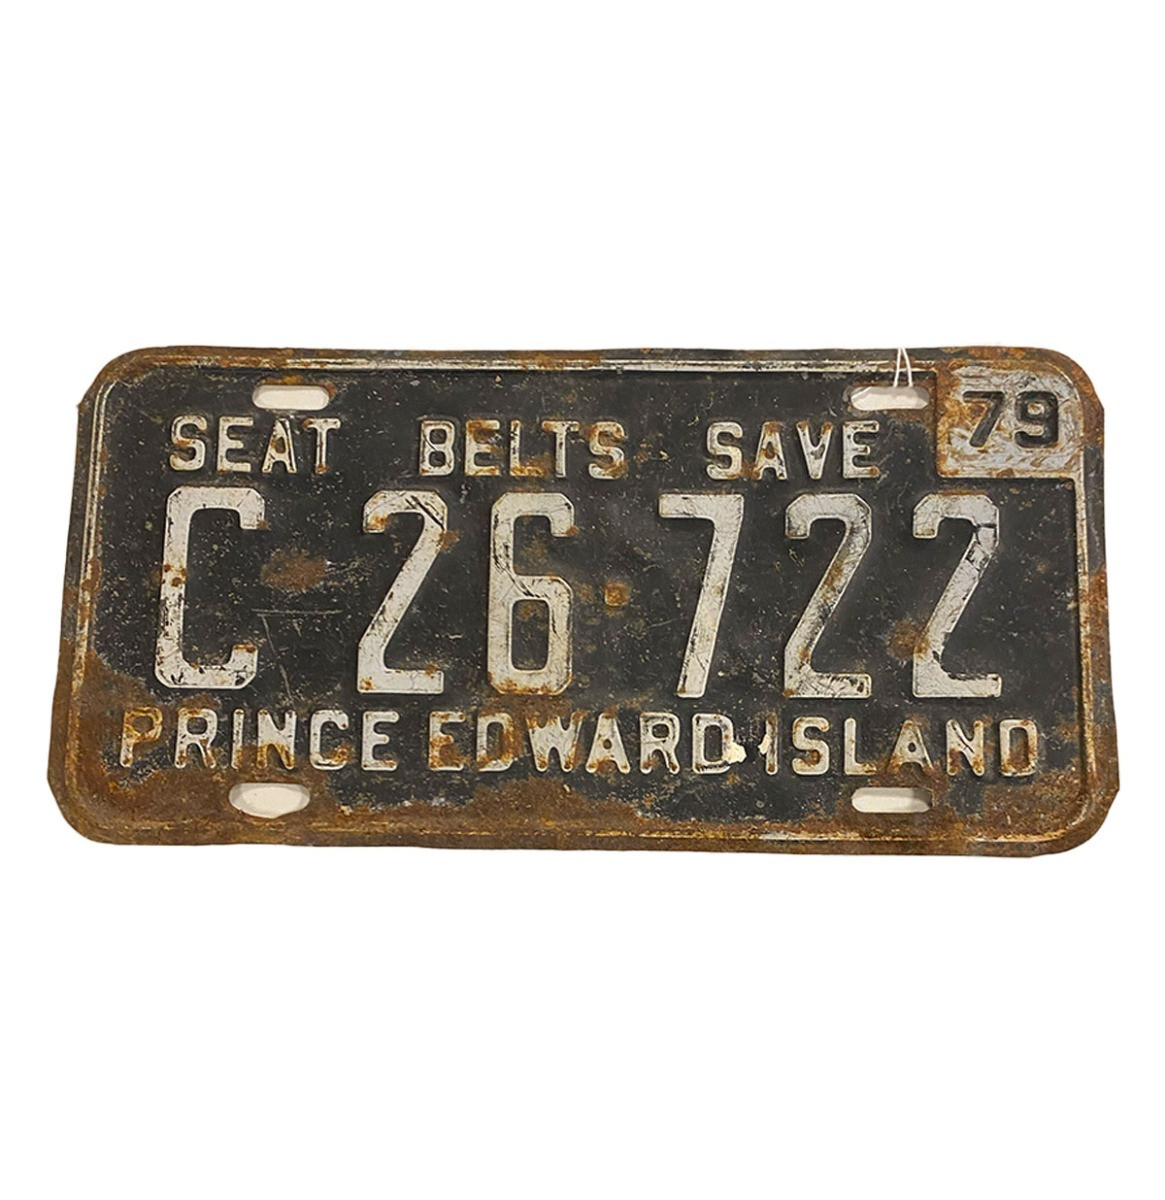 Prince Edward Island License Plate - Original - 1979